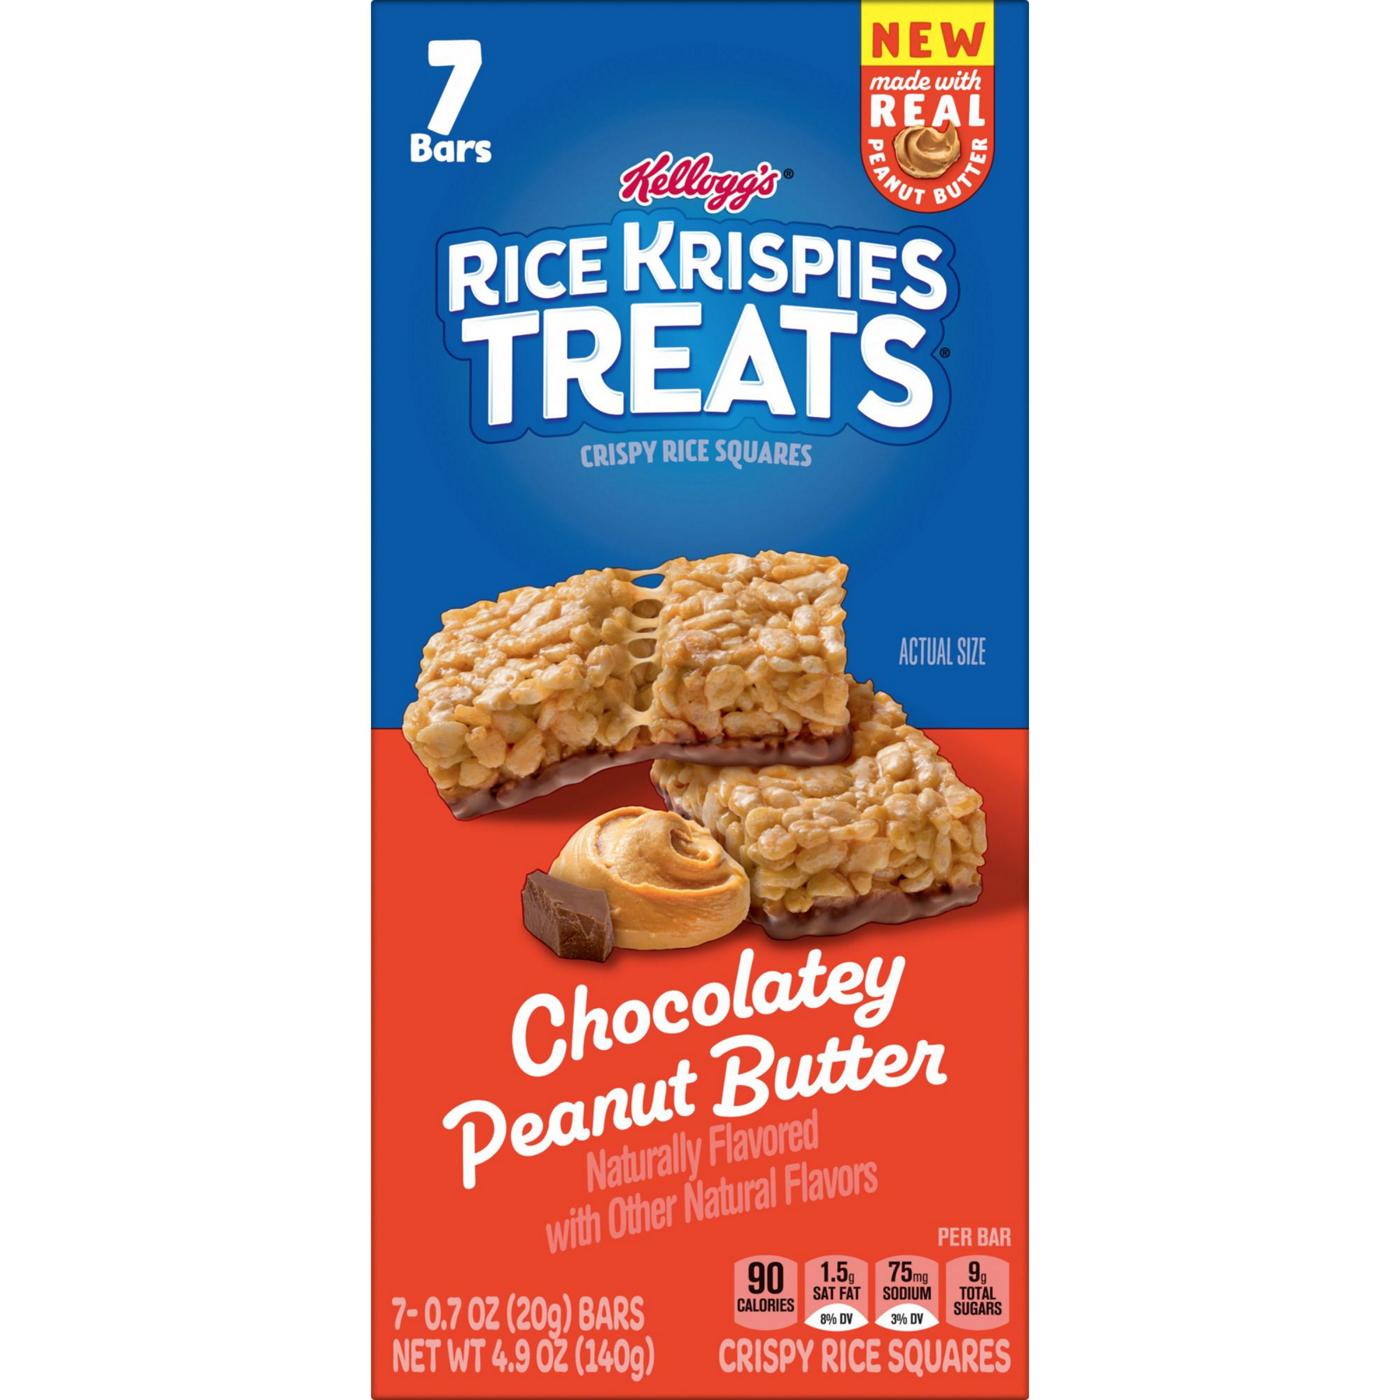 Rice Krispies Treats Chocolatey Peanut Butter Crispy Rice Squares; image 1 of 5